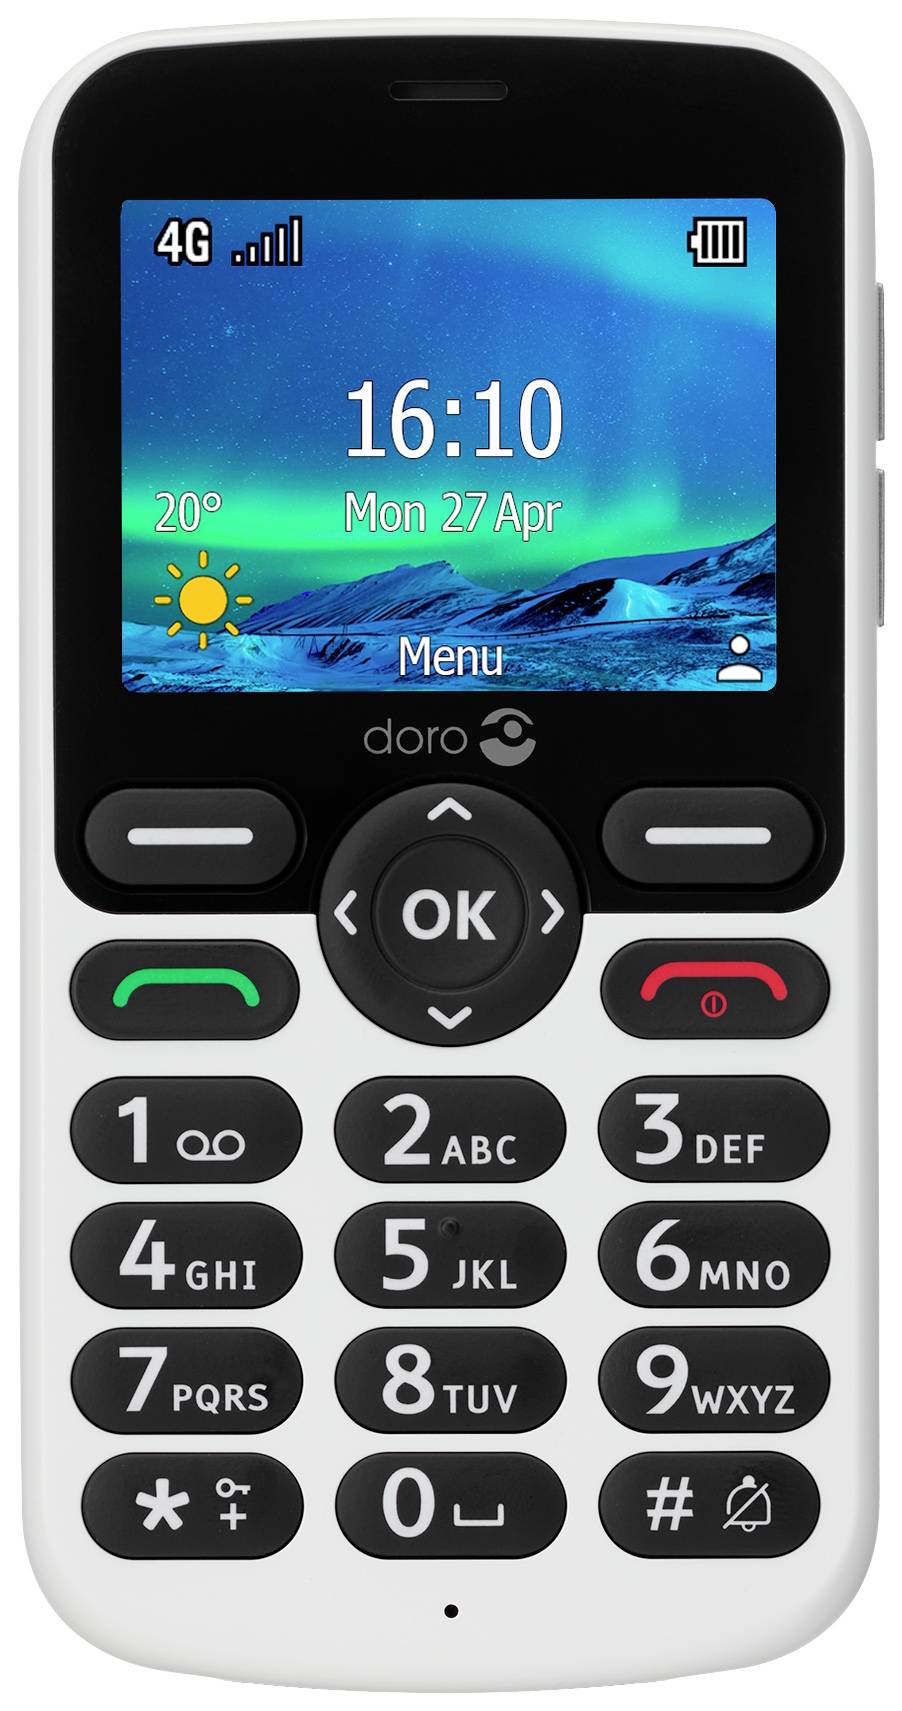 doro 5860 Big button mobile phone Charging station Black/white